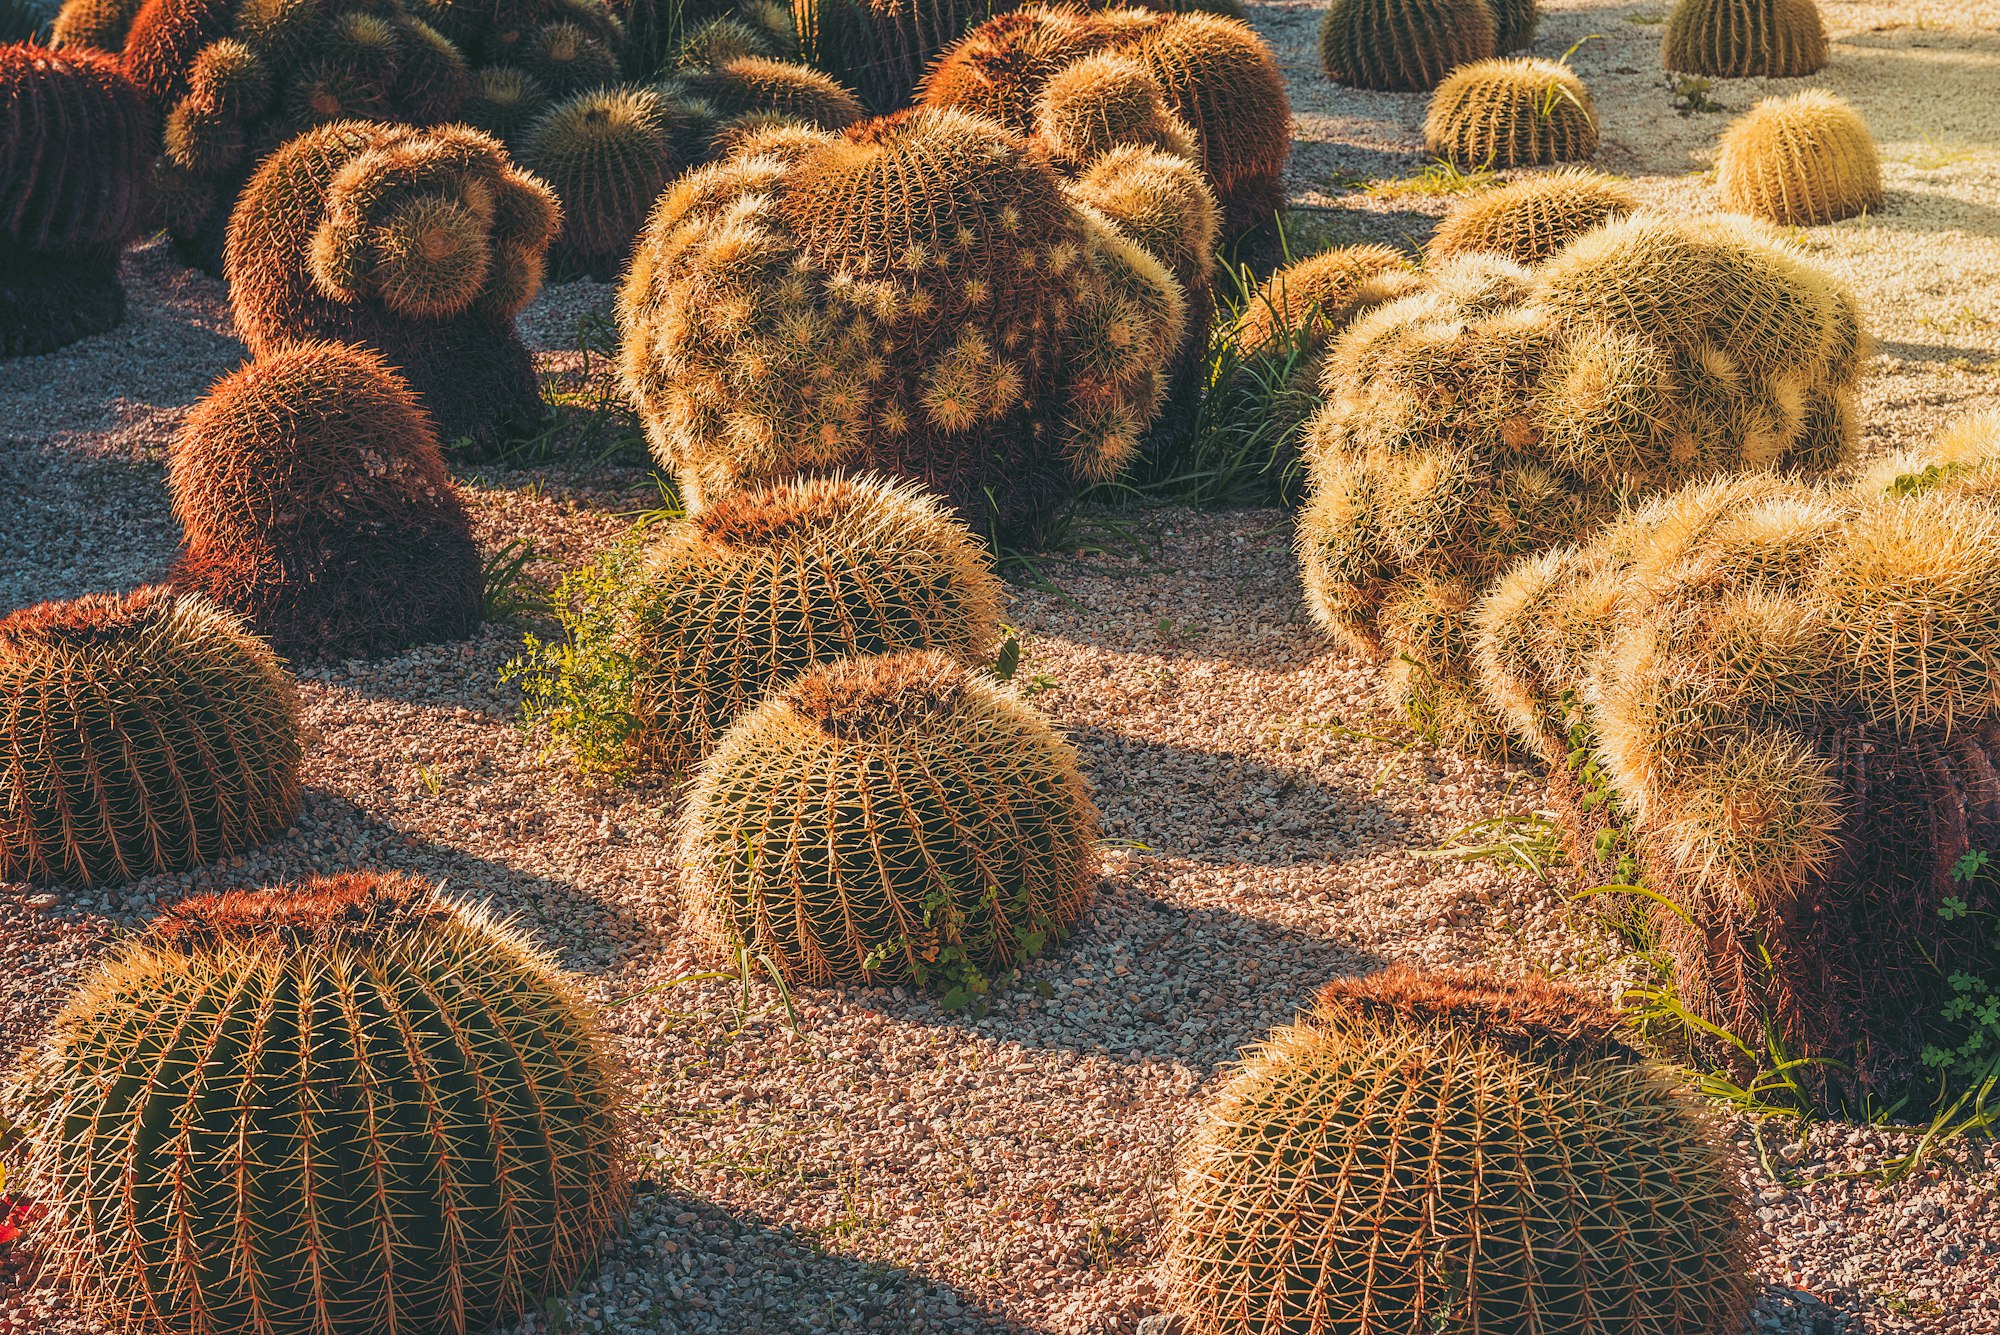 Round Golden Barrel cactus garden